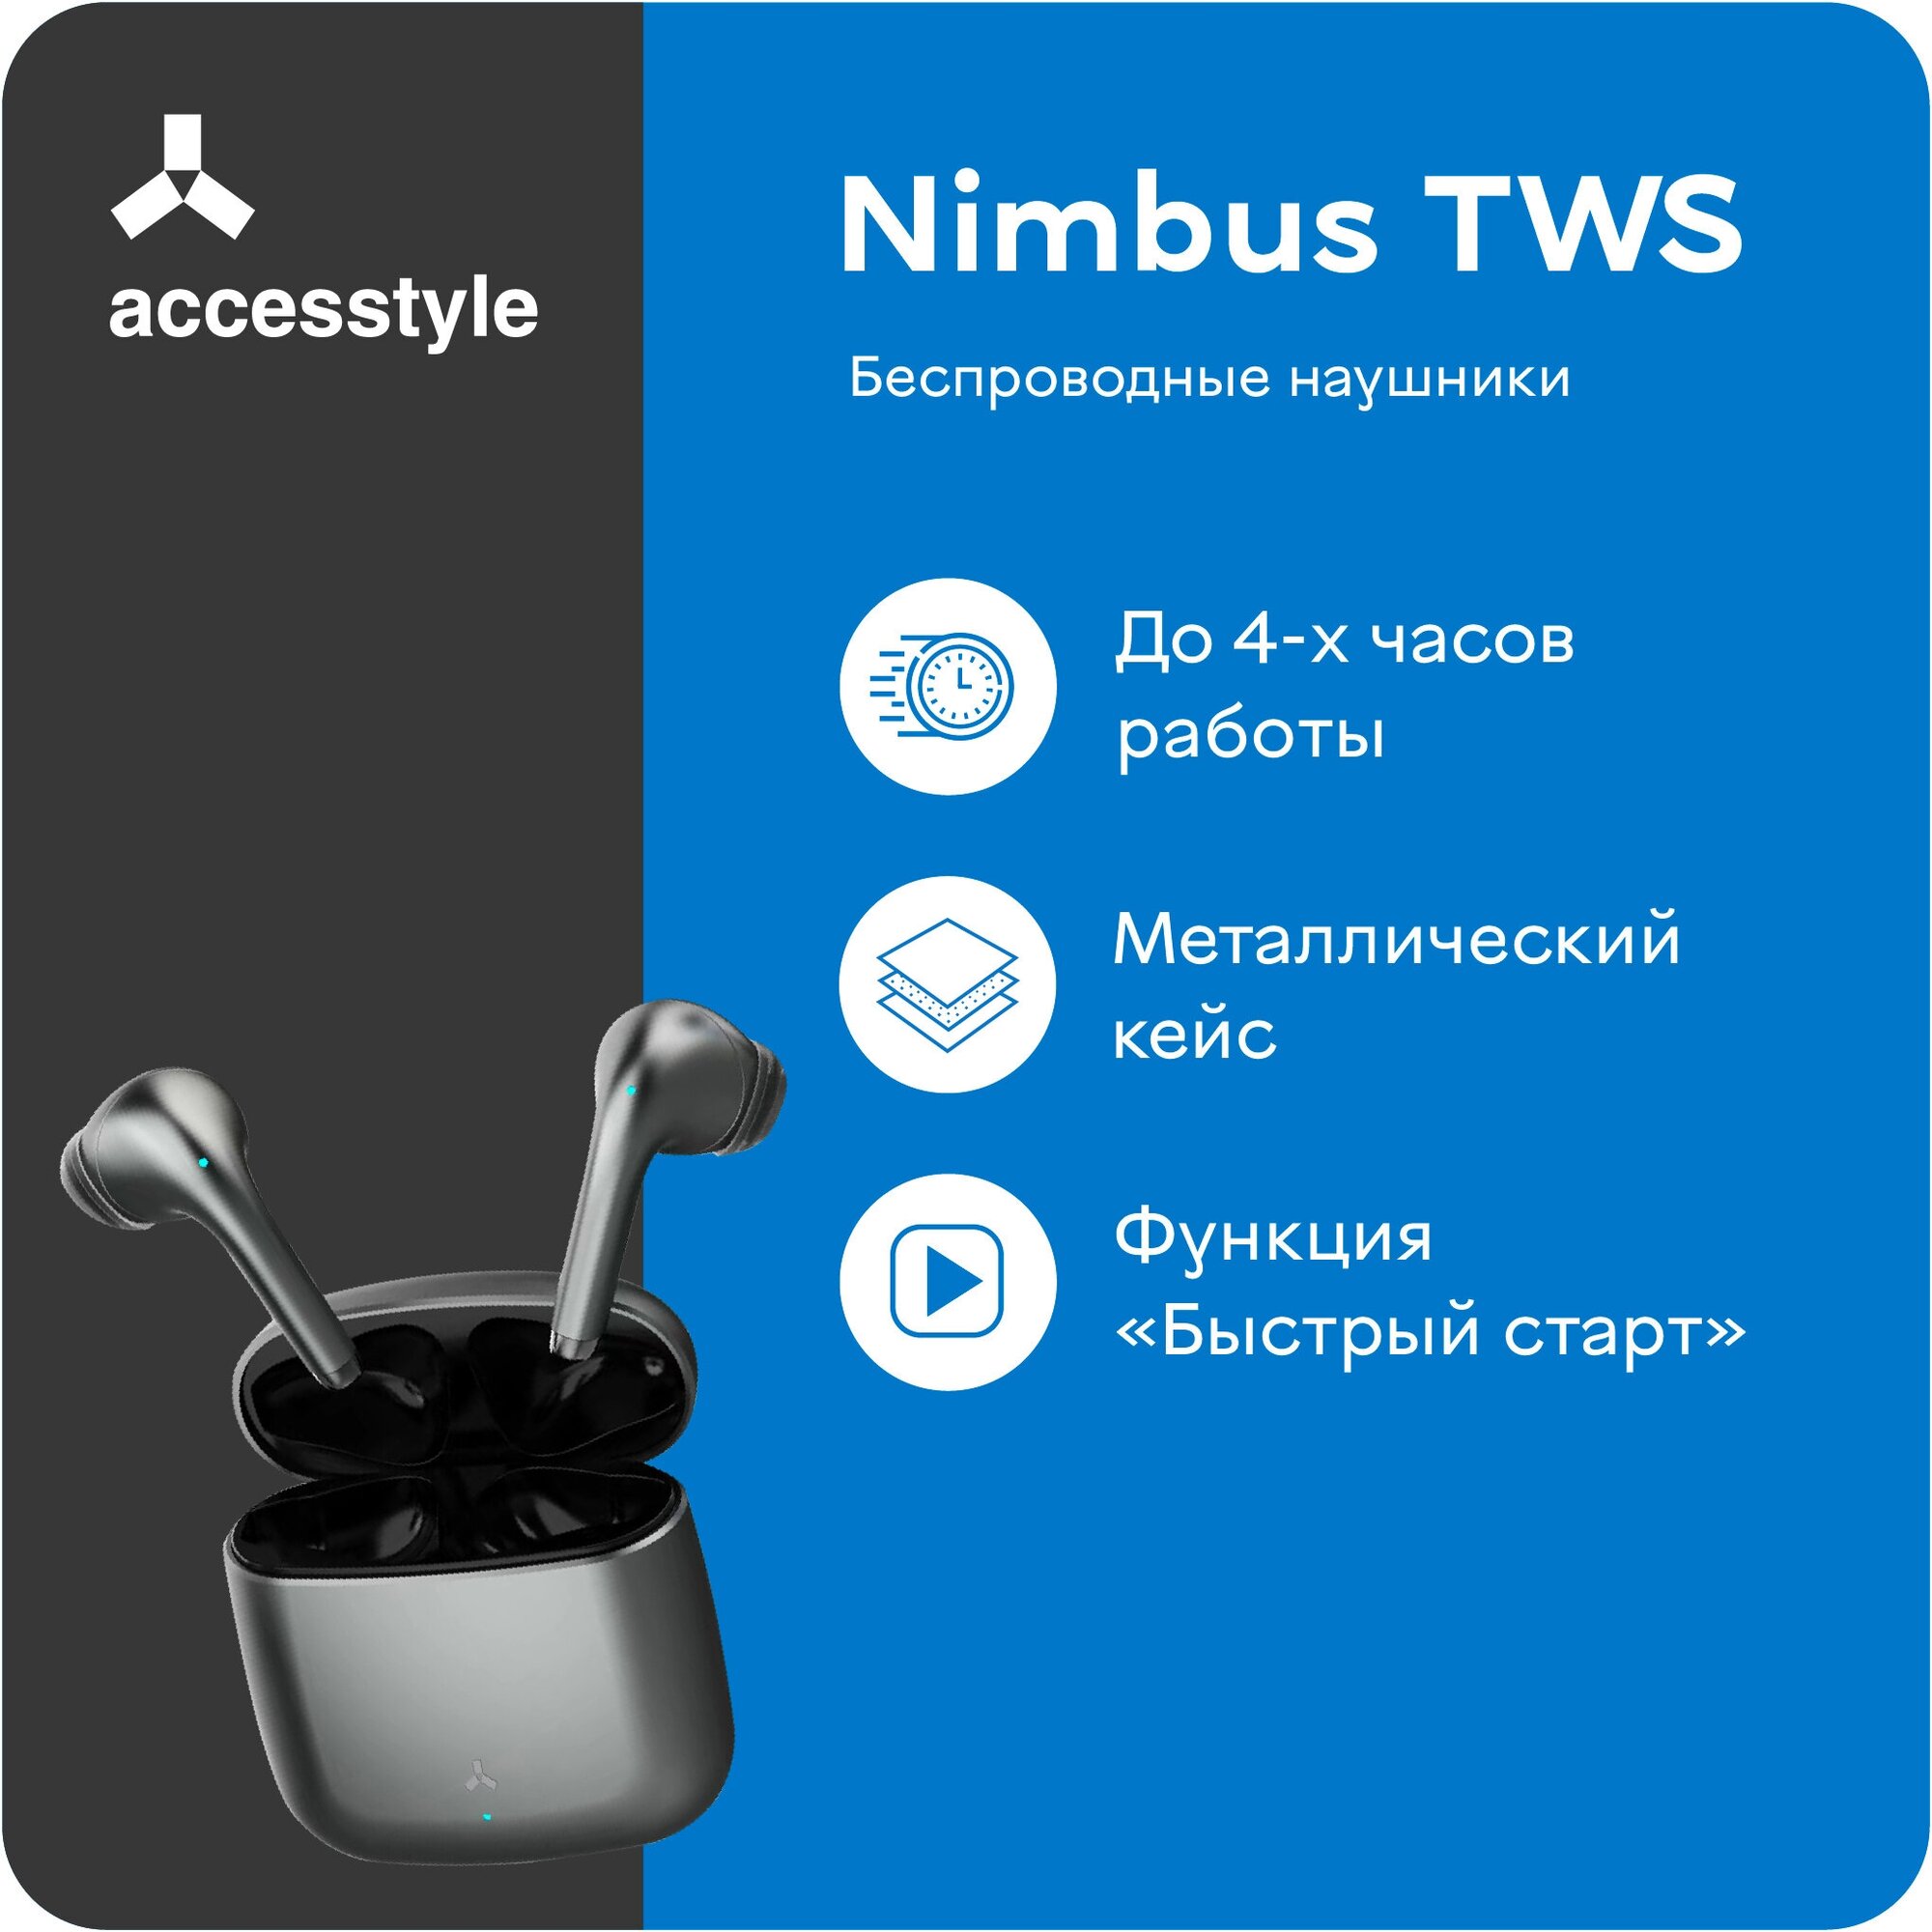 Беспроводные TWS-наушники Accesstyle Nimbus TWS